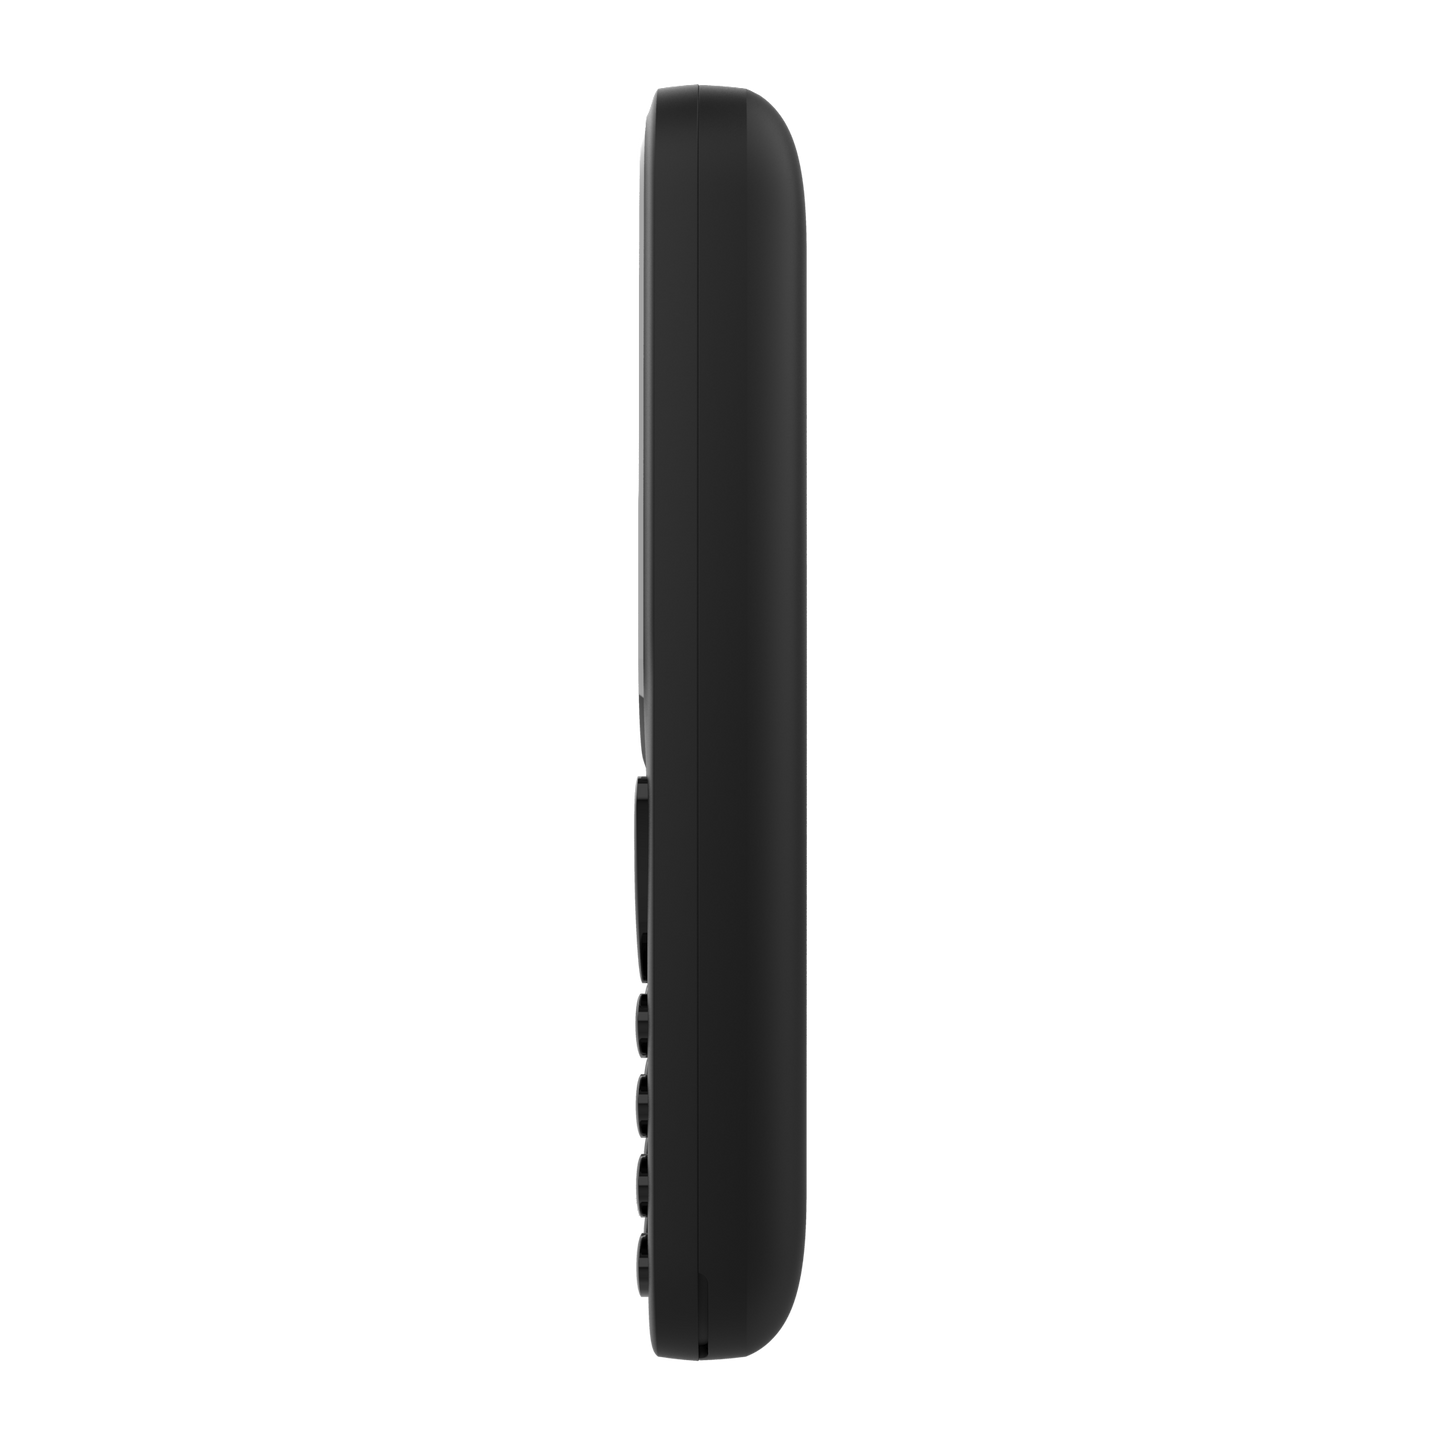 TTfone TT170 Black Dual SIM mobile - Warehouse Deals with USB Cable